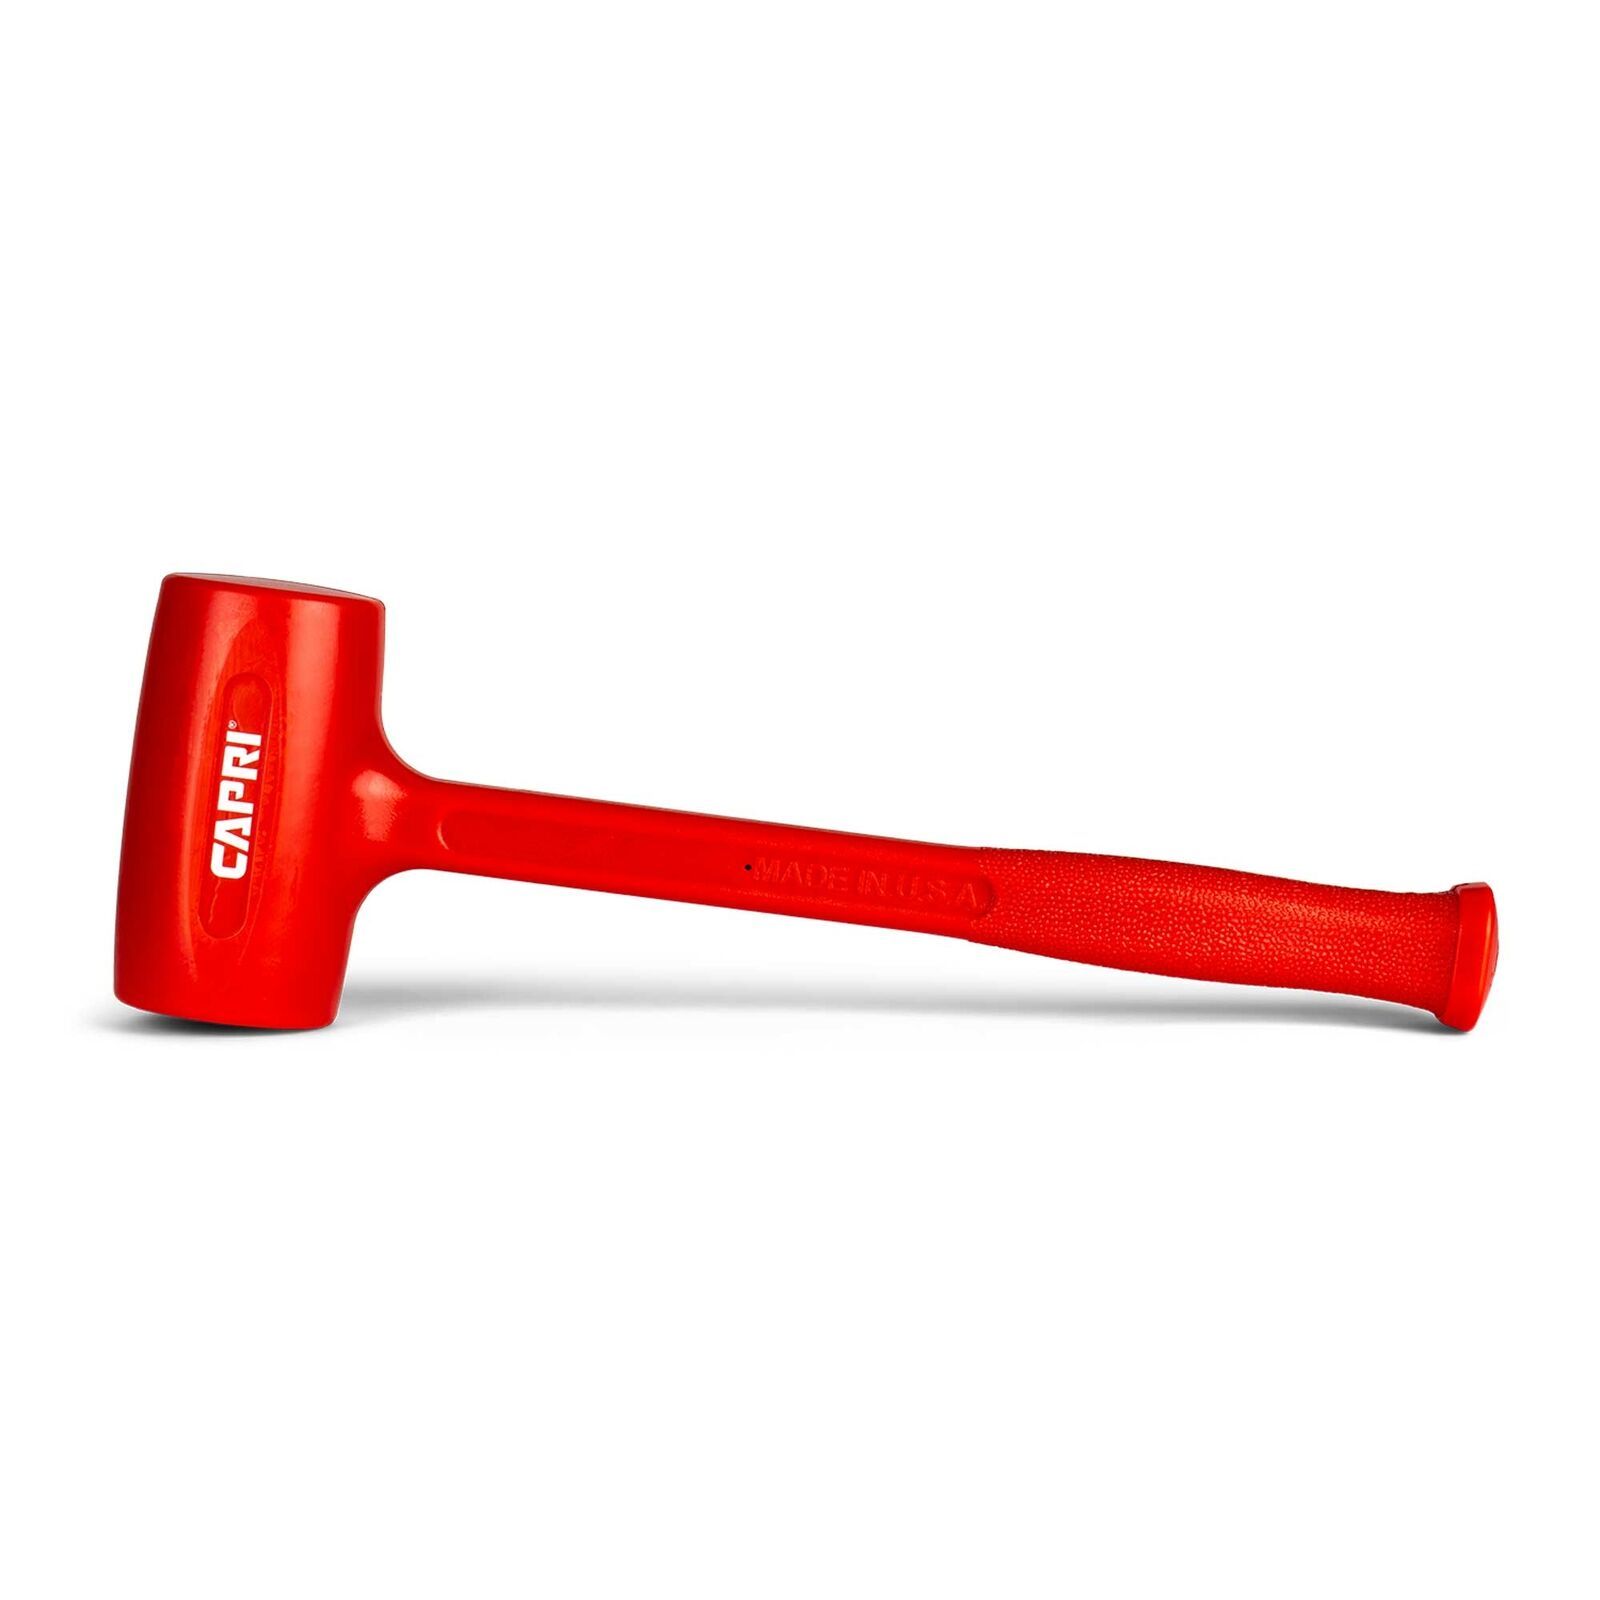 Capri Tools 45 oz. Dead Blow Hammer, Made in USA